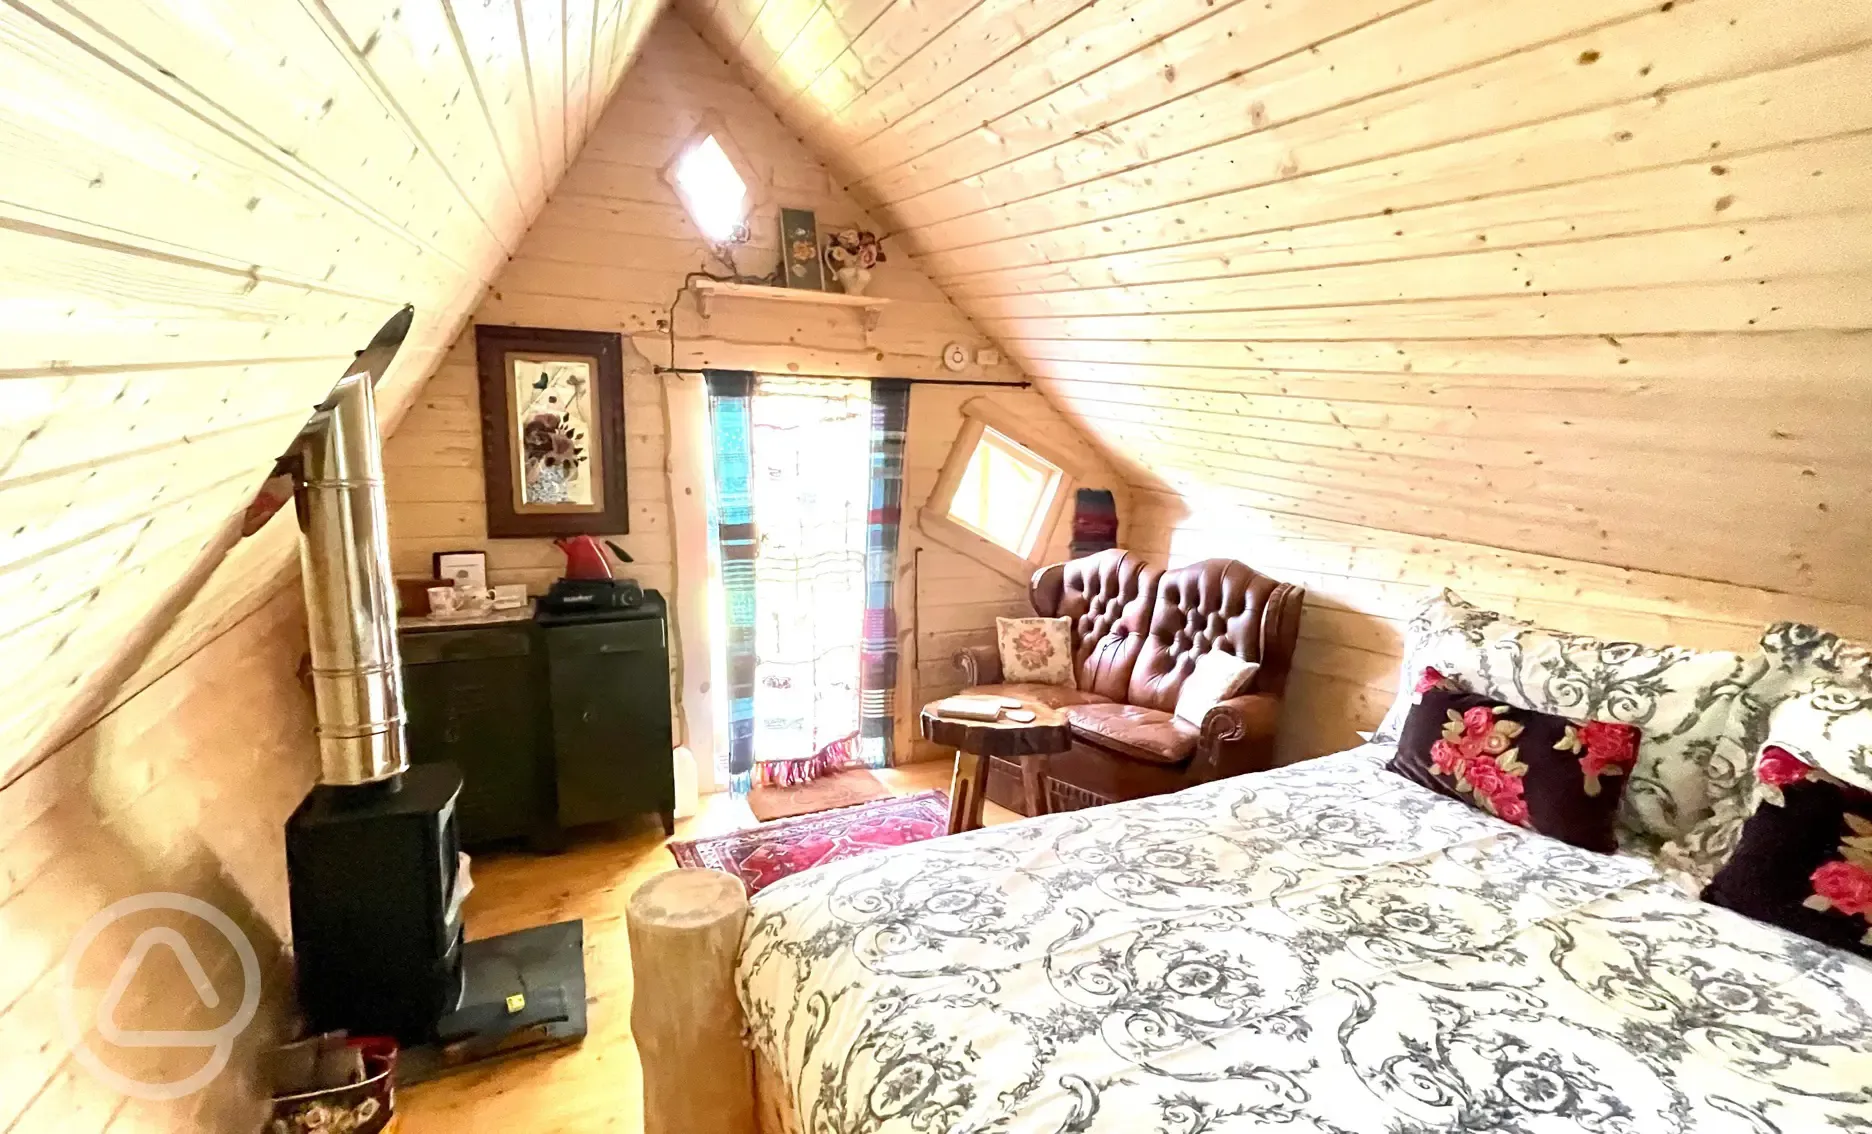  Rose Hollow Log Cabin interior